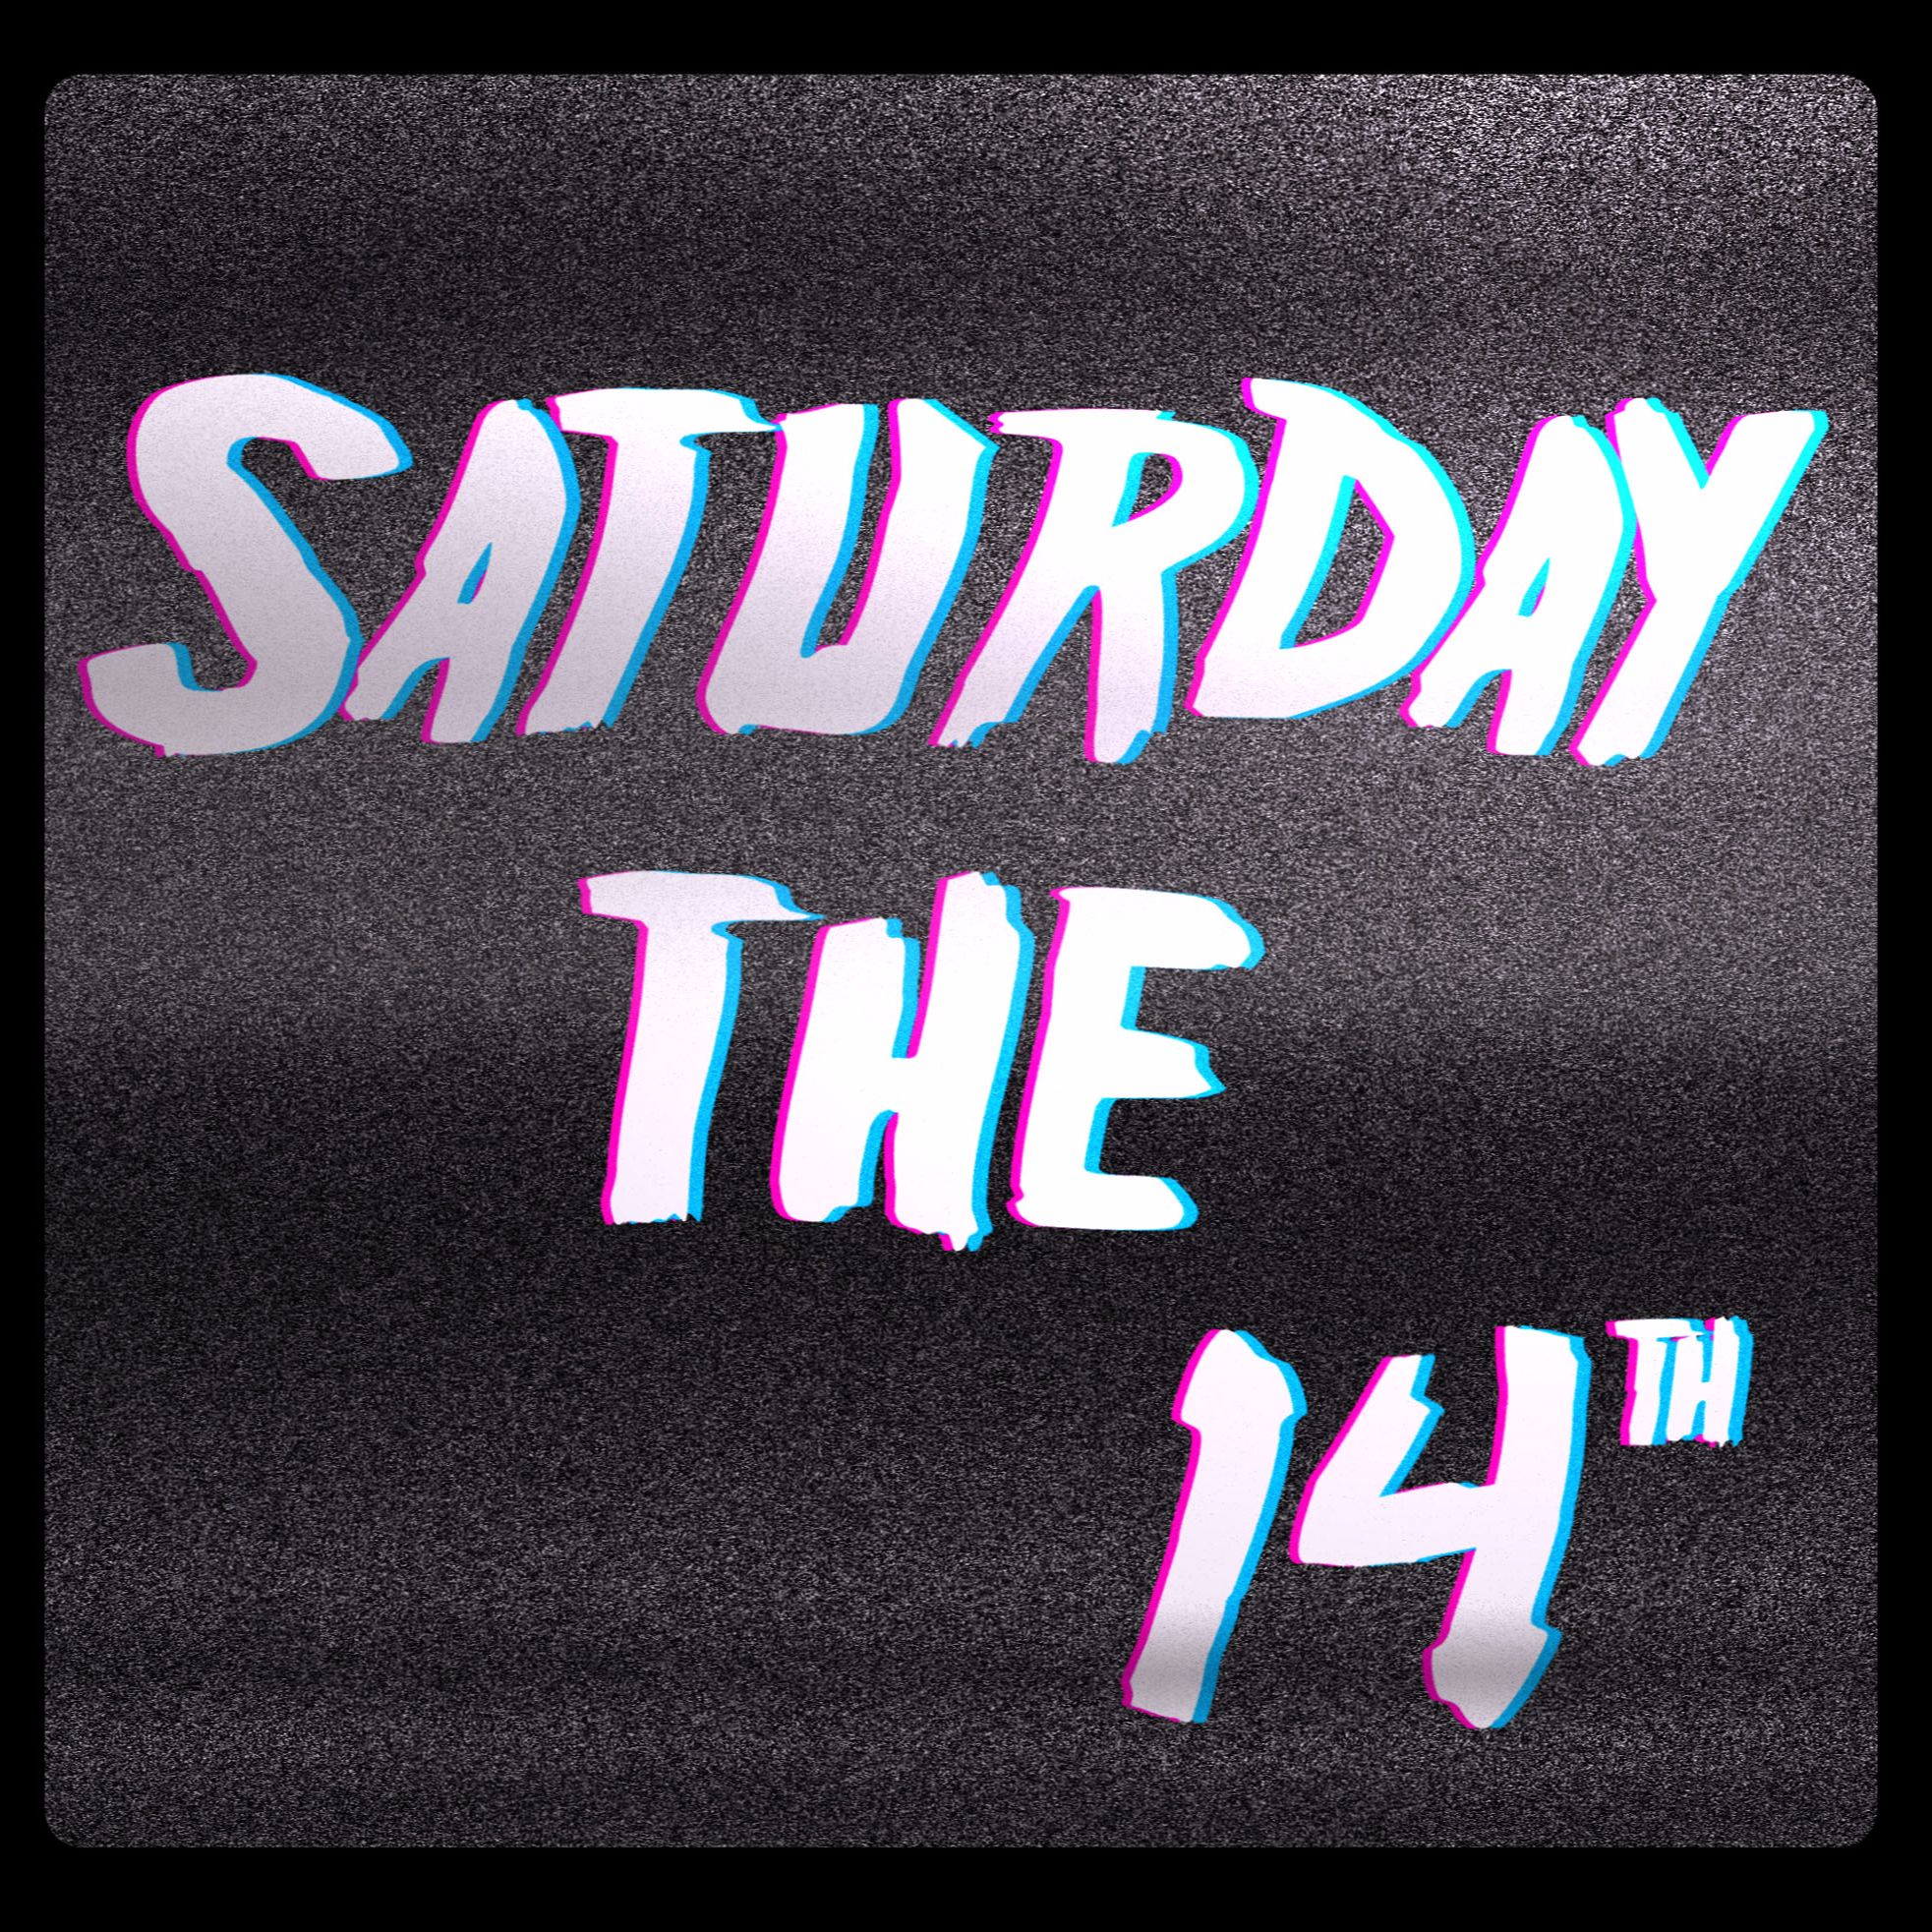 Saturday the 14th: A Horror Movie Podcast